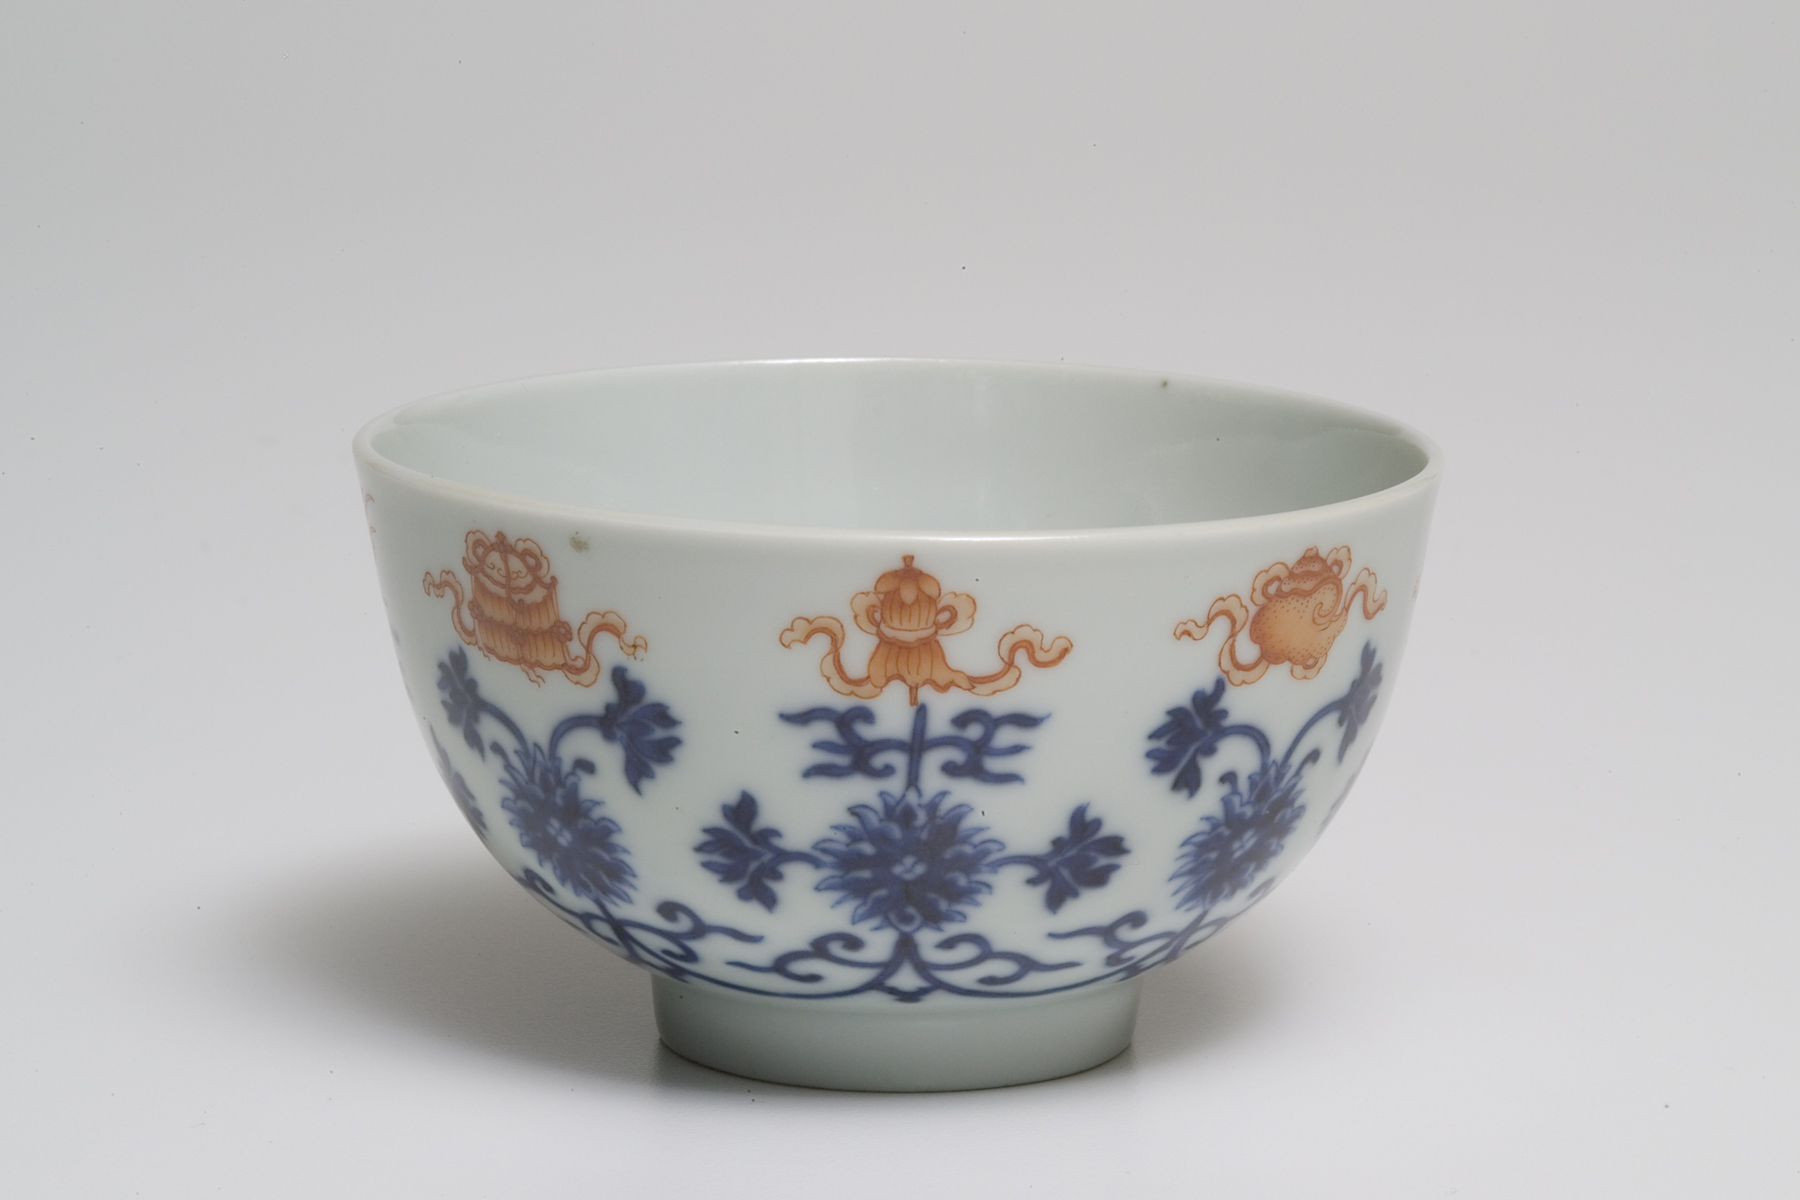 bowl with eight auspicious symbols of Buddhism